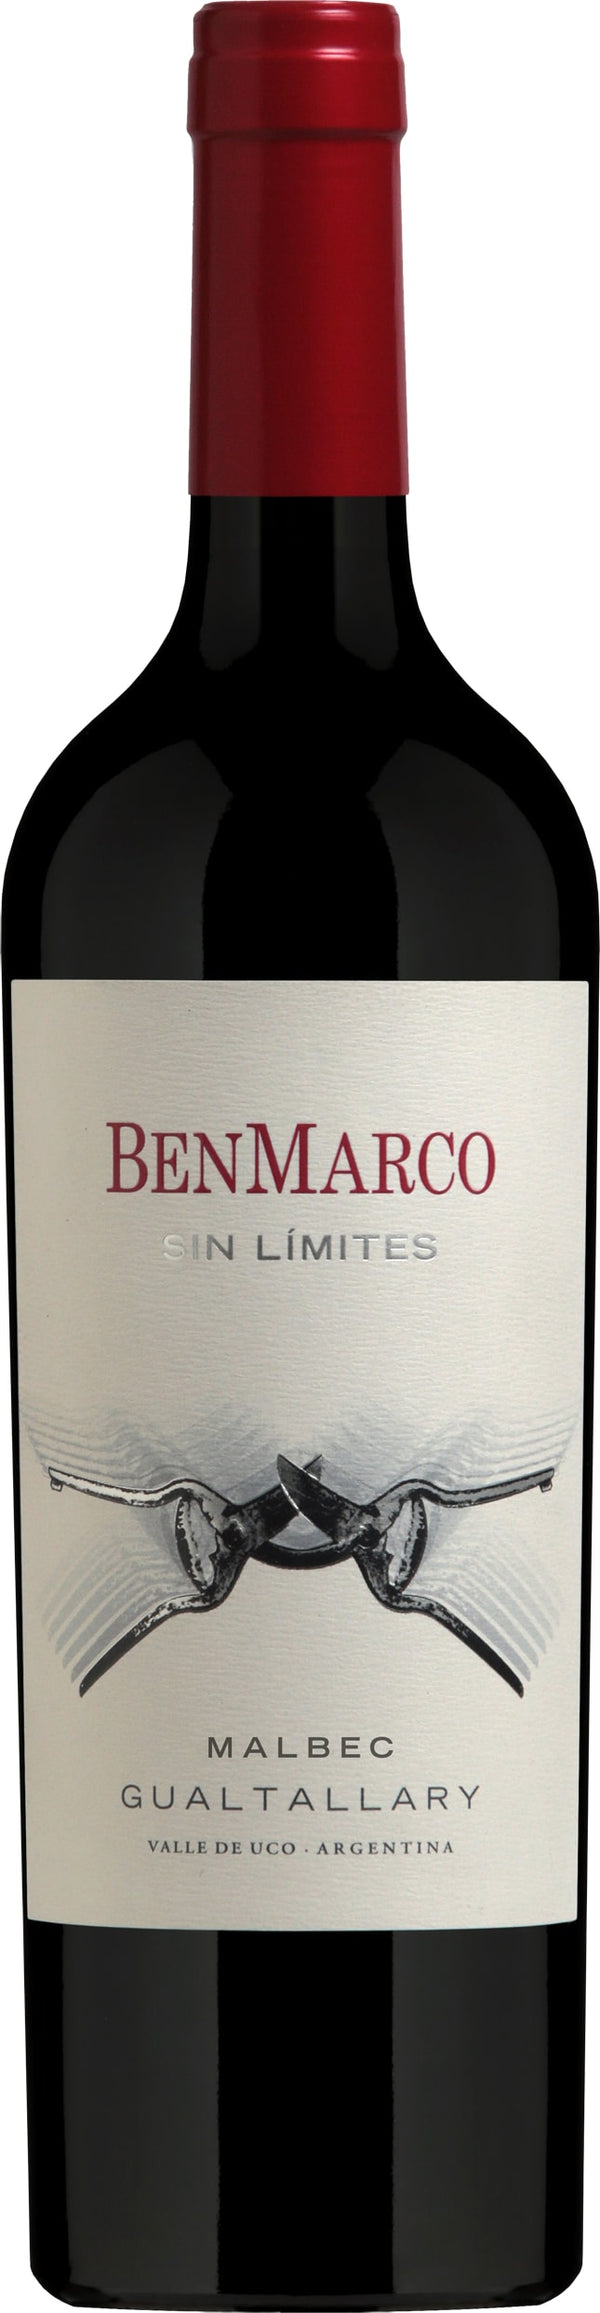 Susana Balbo BenMarco Sin Limites Malbec 2020 6x75cl - Just Wines 